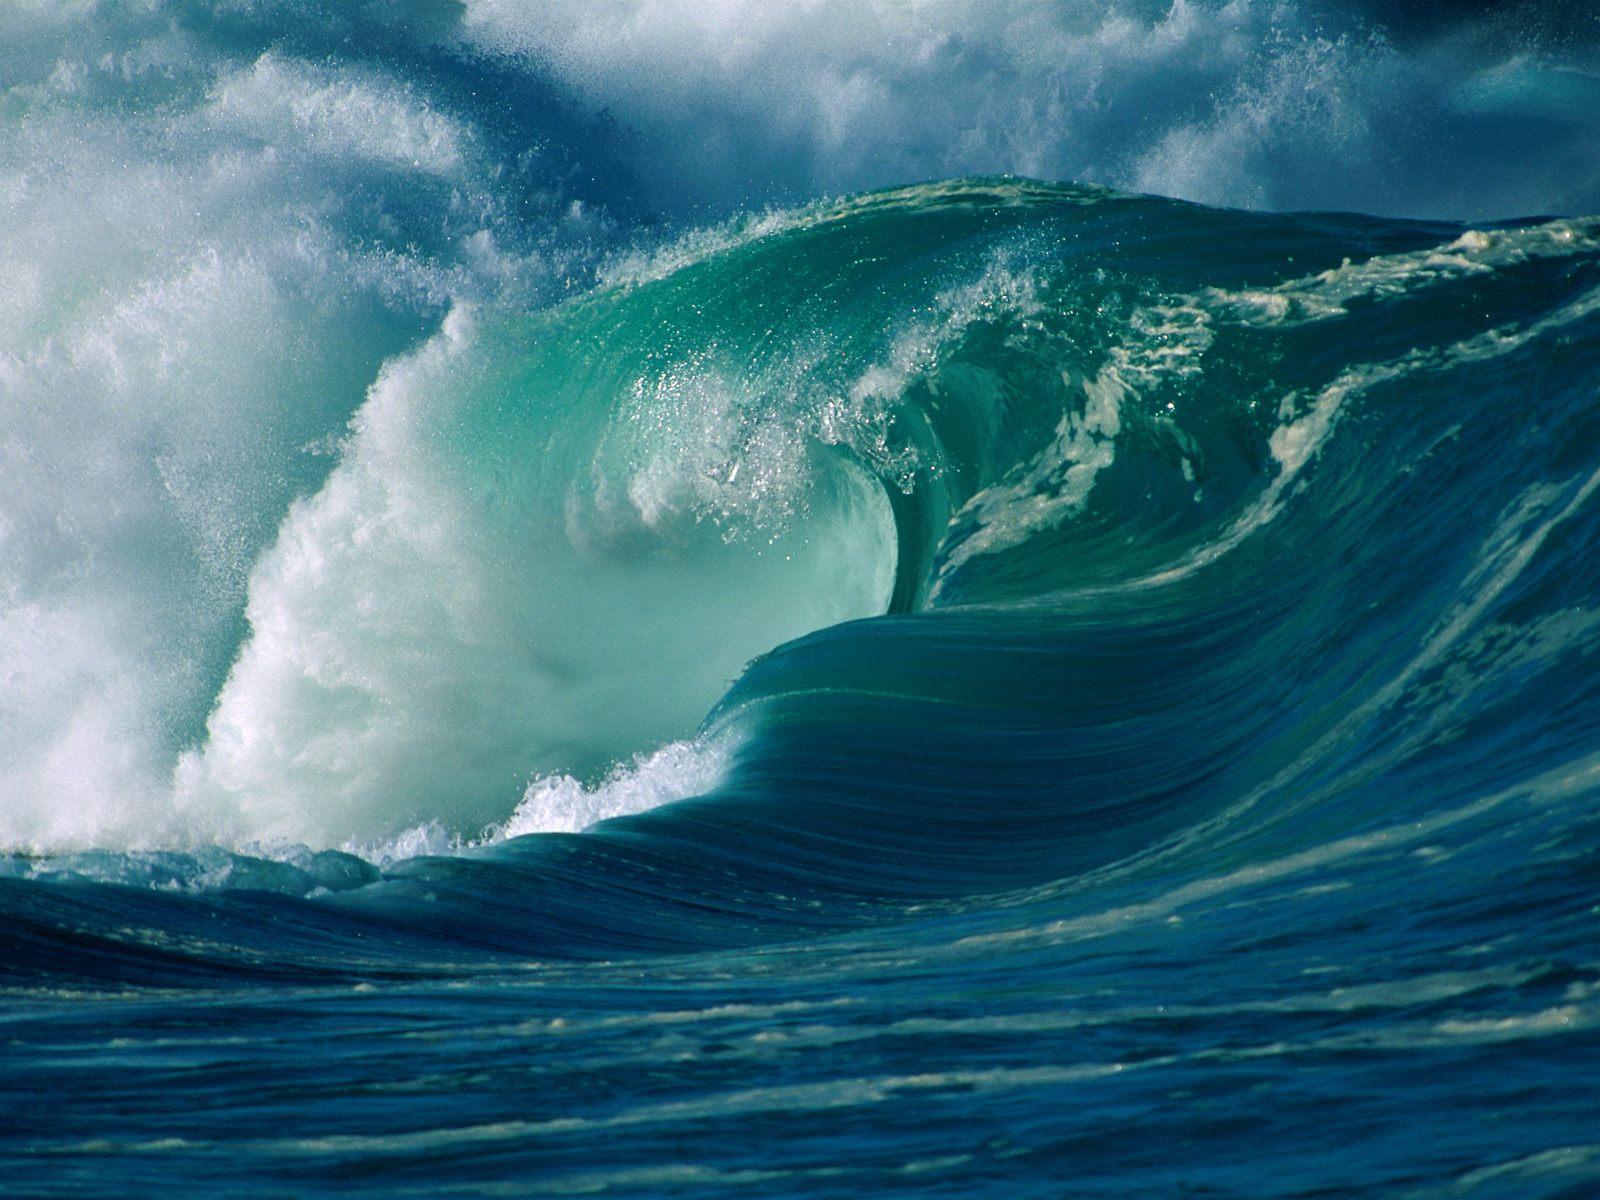 Tsunami wave free desktop background wallpaper image